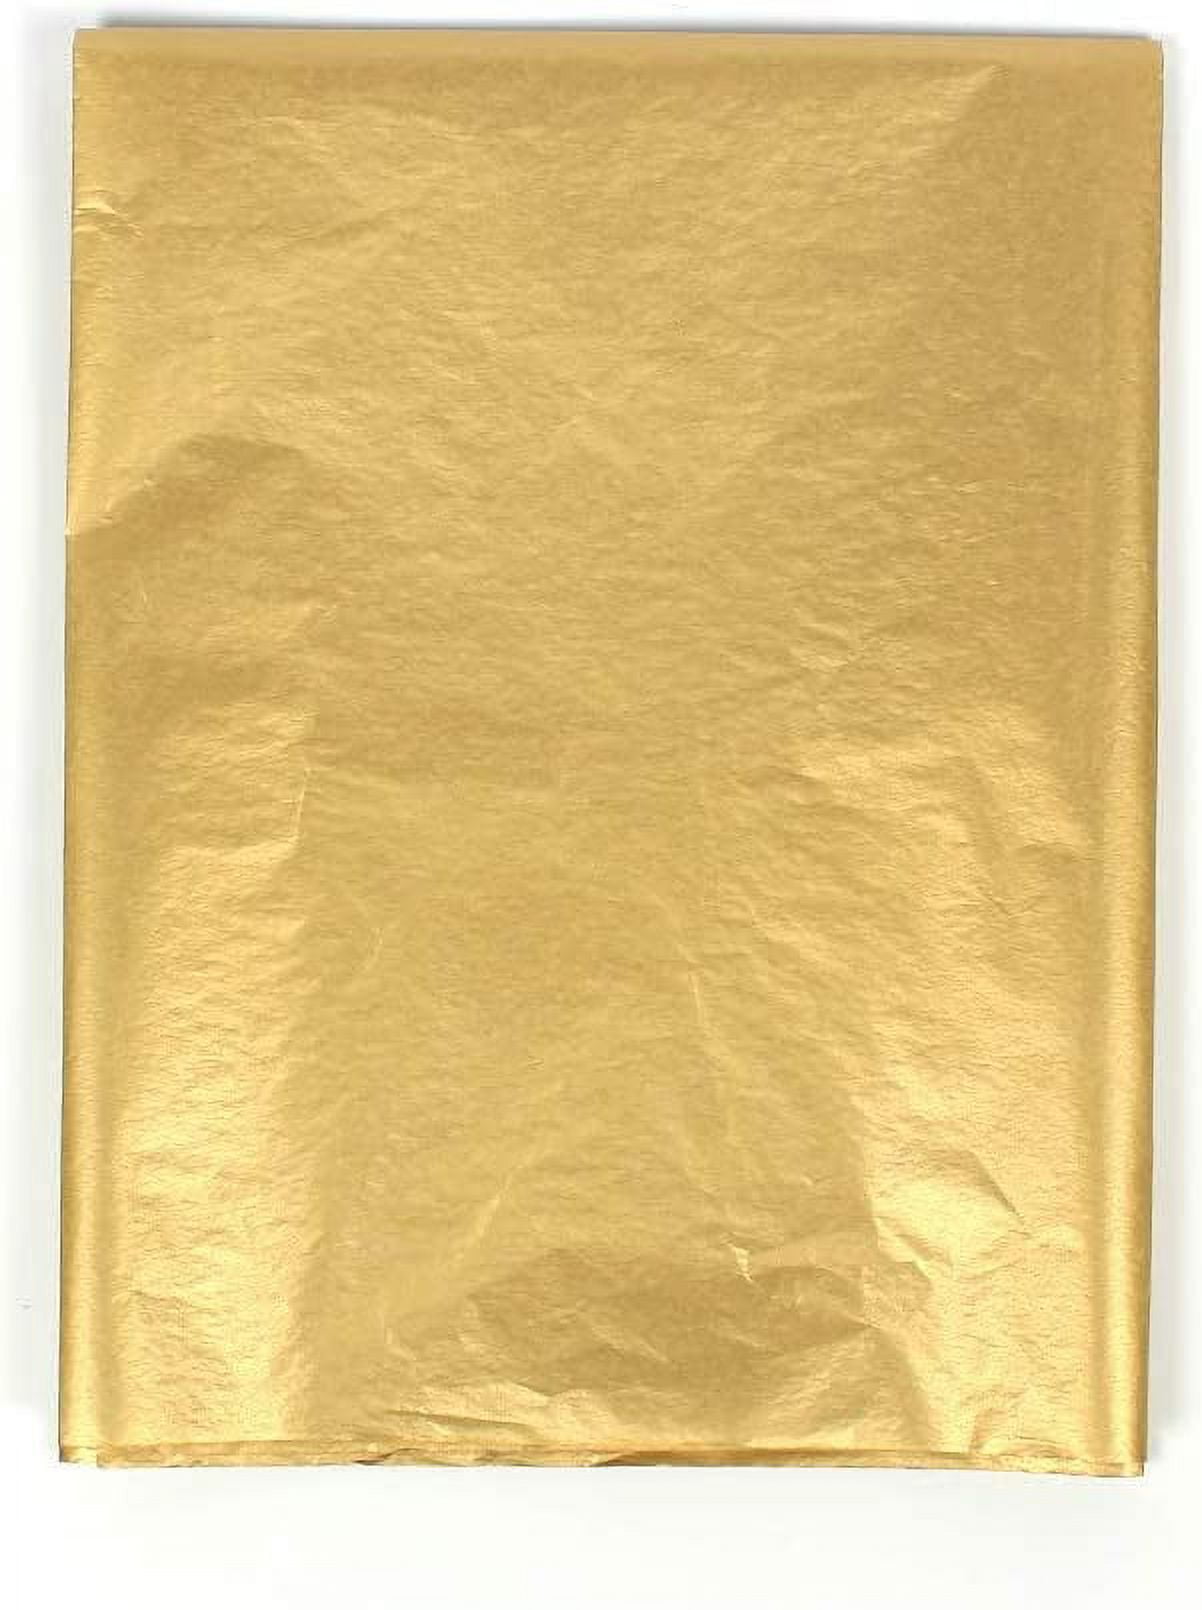  UNIQOOO 100 Sheets 20X14 Premium Metallic Rose Gold